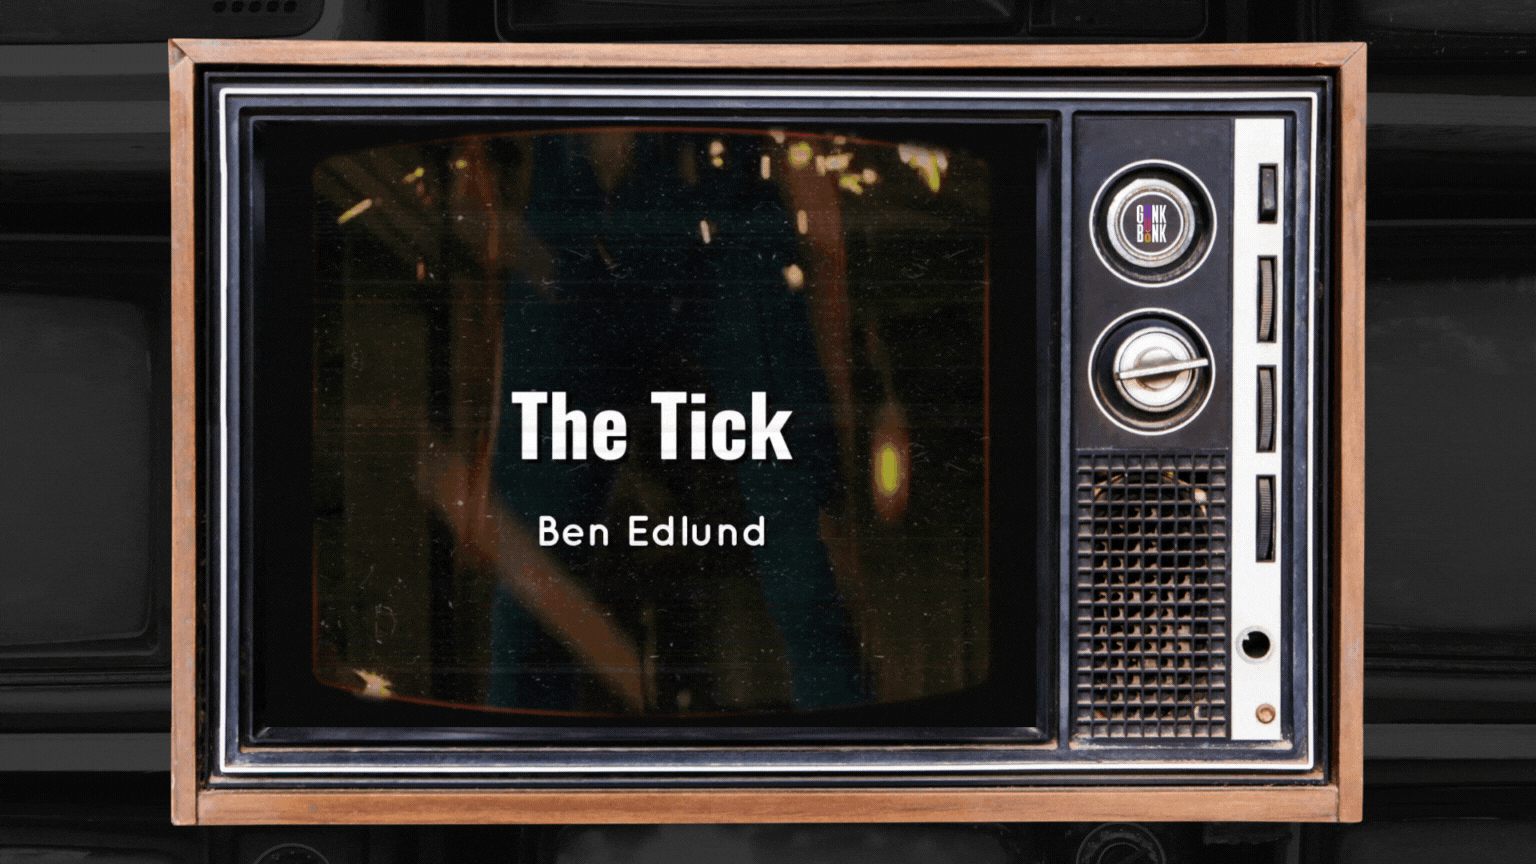 The Tick TV Show and Comics